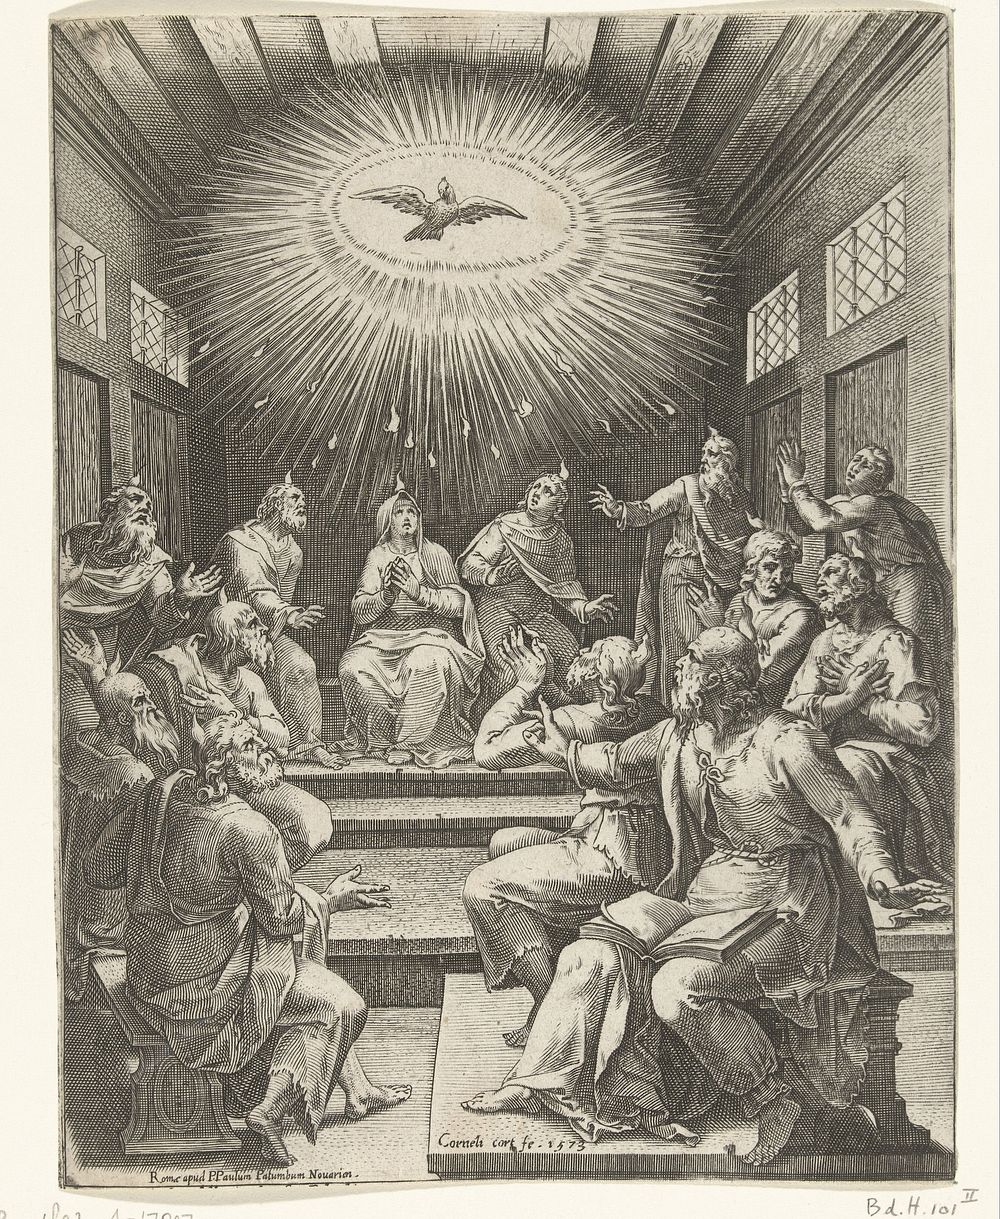 Uitstorting van de Heilige Geest (in or after 1573 - c. 1623) by Cornelis Cort, Federico Zuccaro, Pietro Paolo Palombo and…